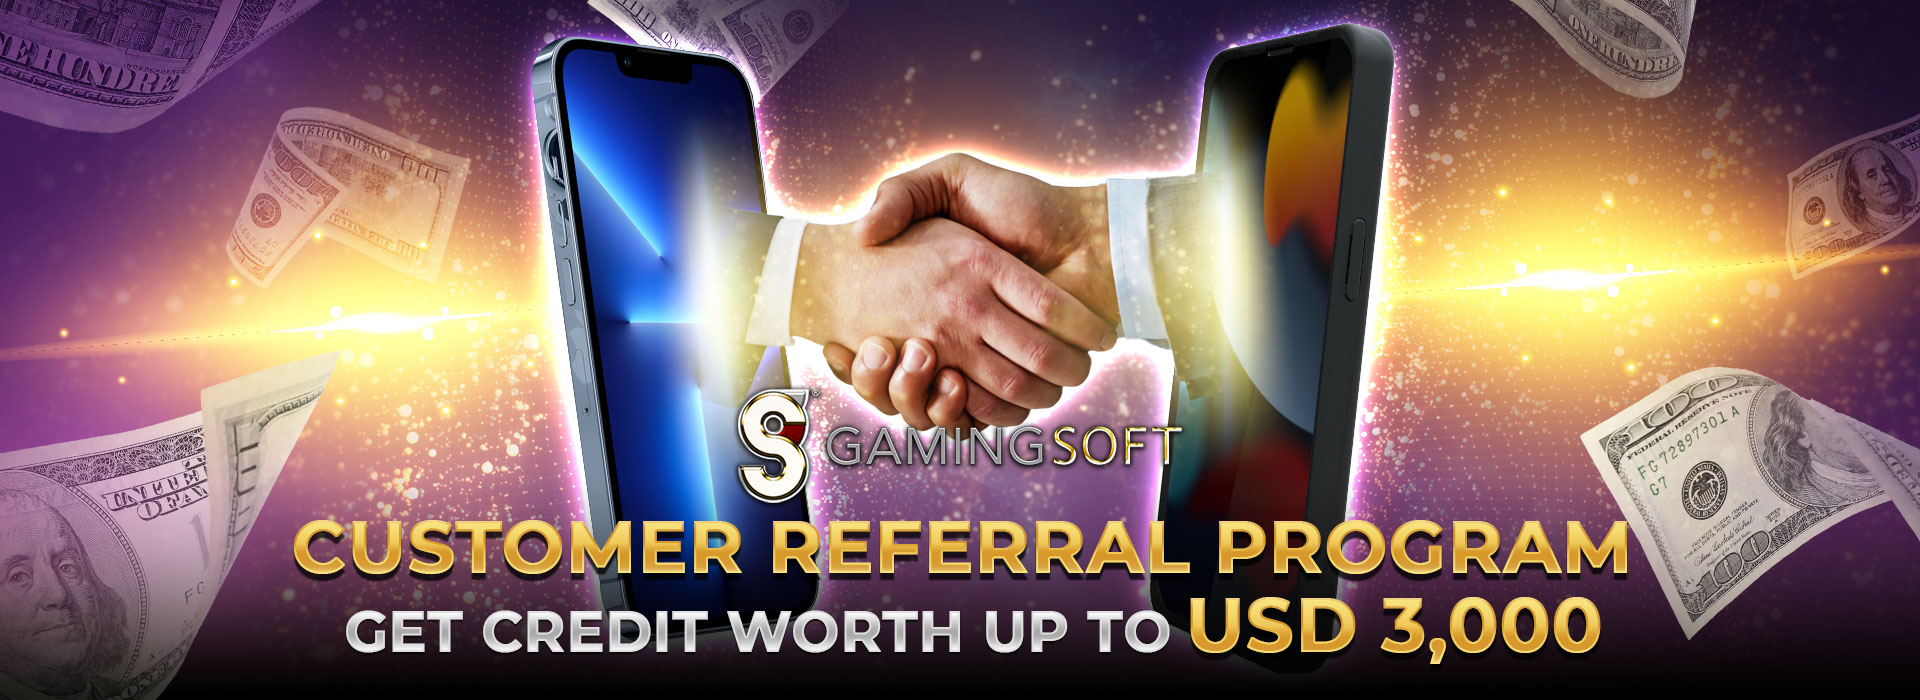 Customer Referral Program Web Banner - GamingSoft